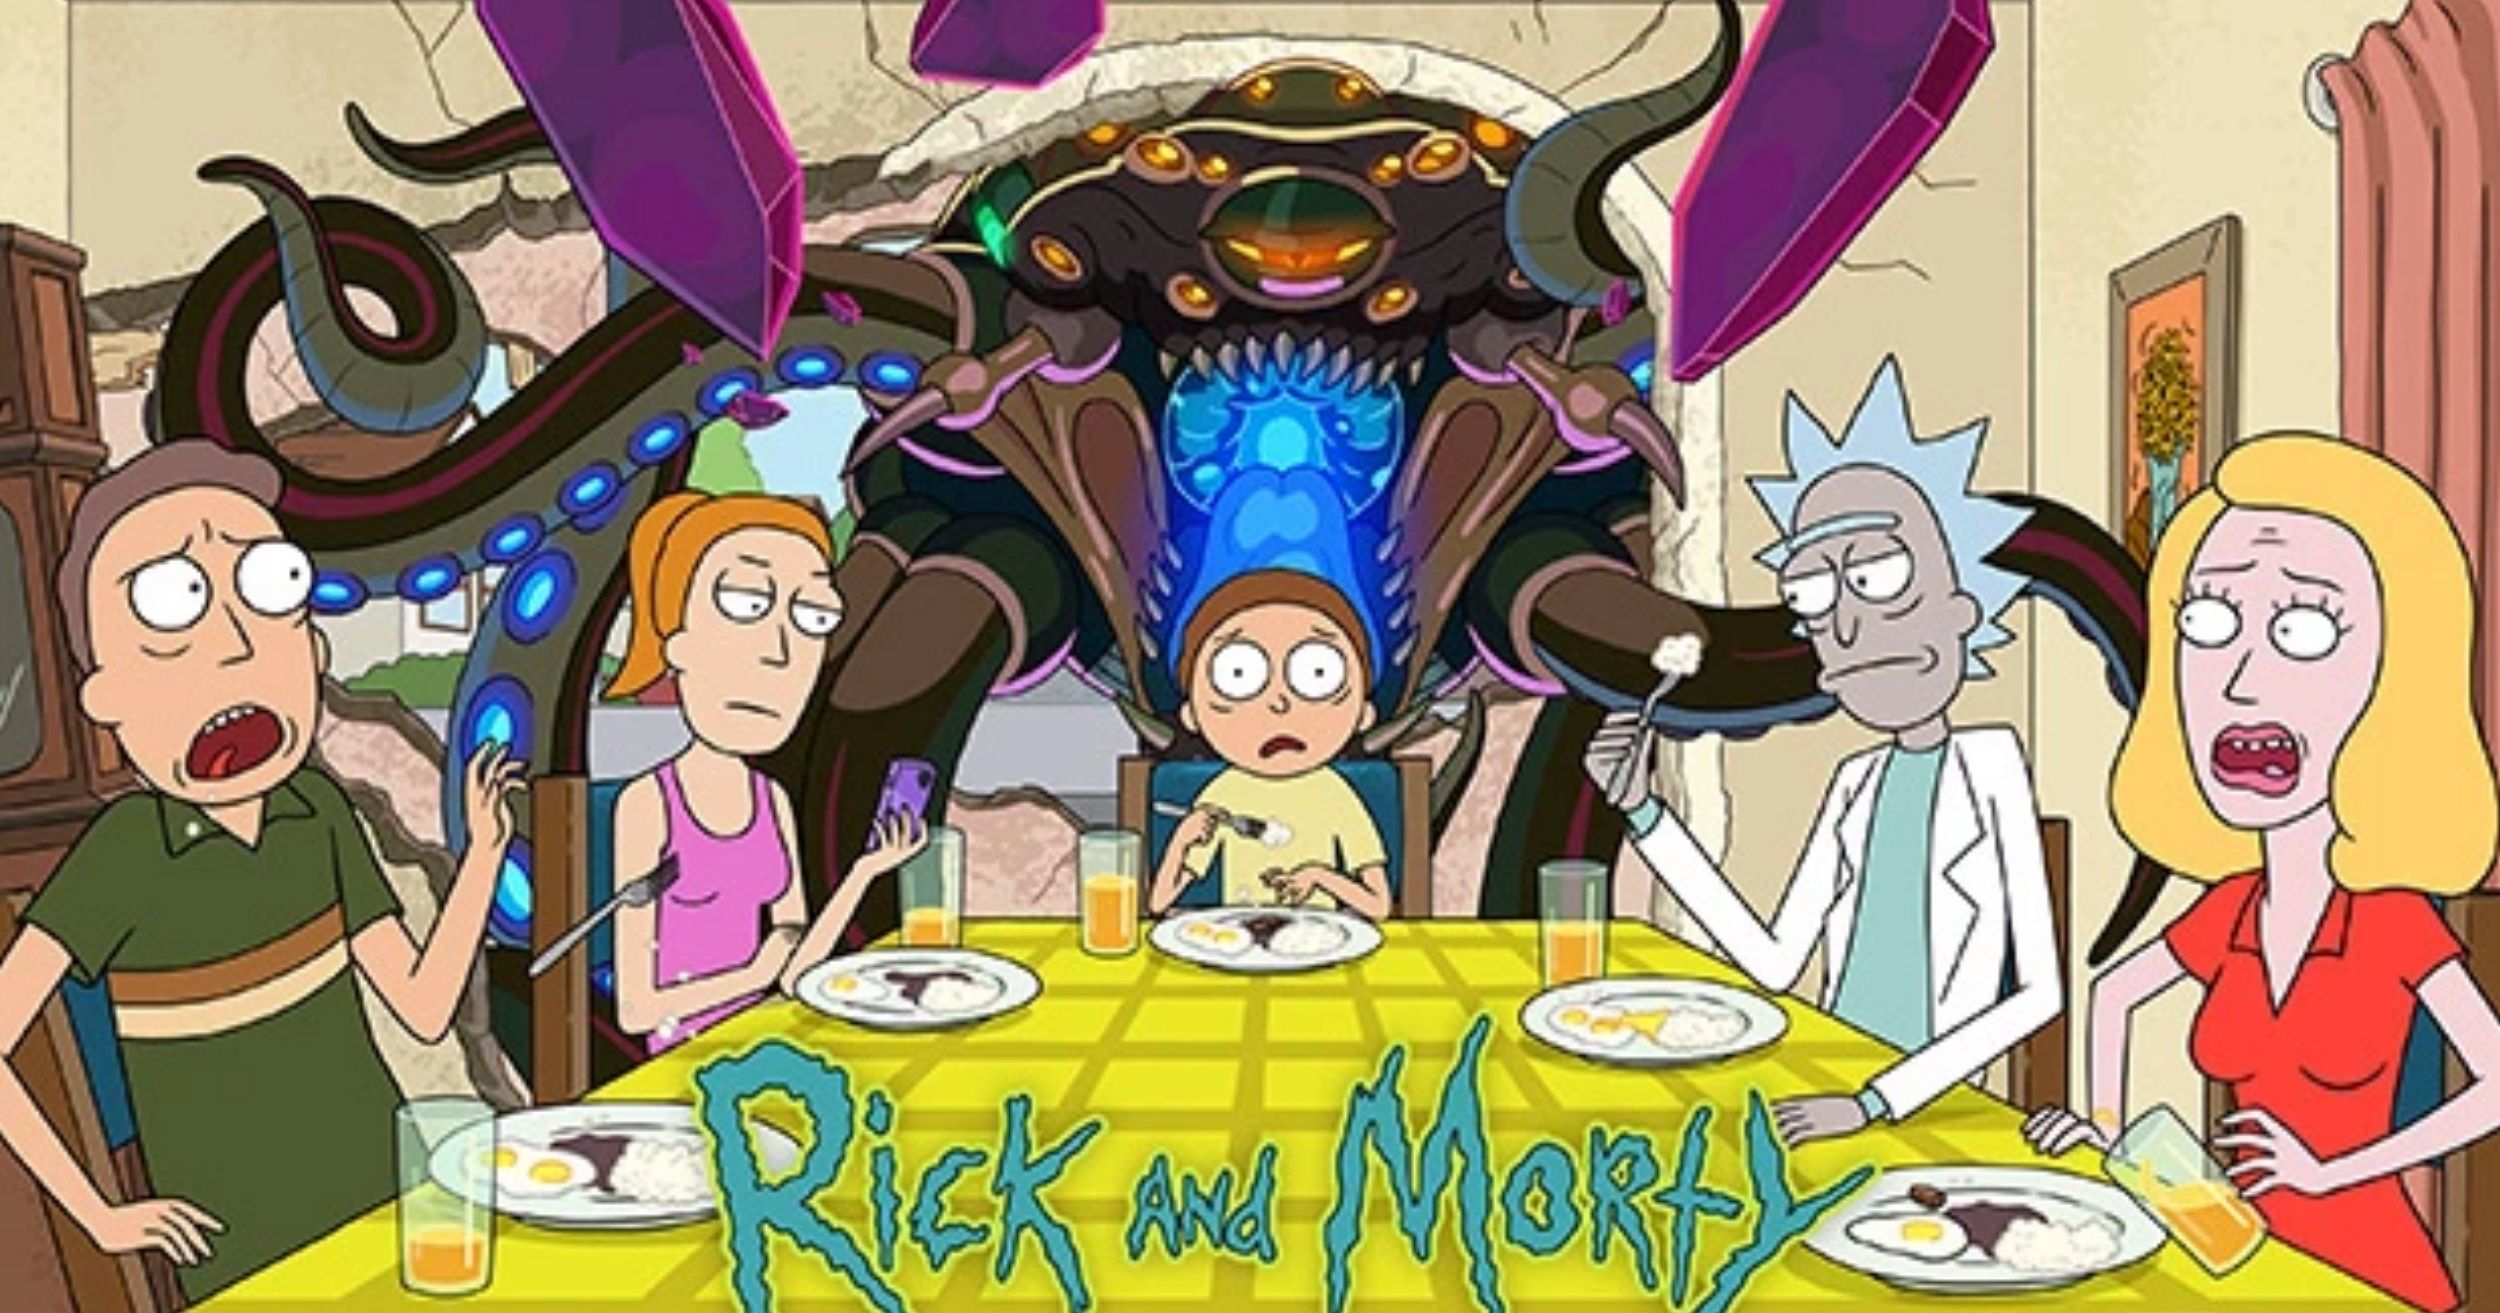 rick and morty season 1 full season download free